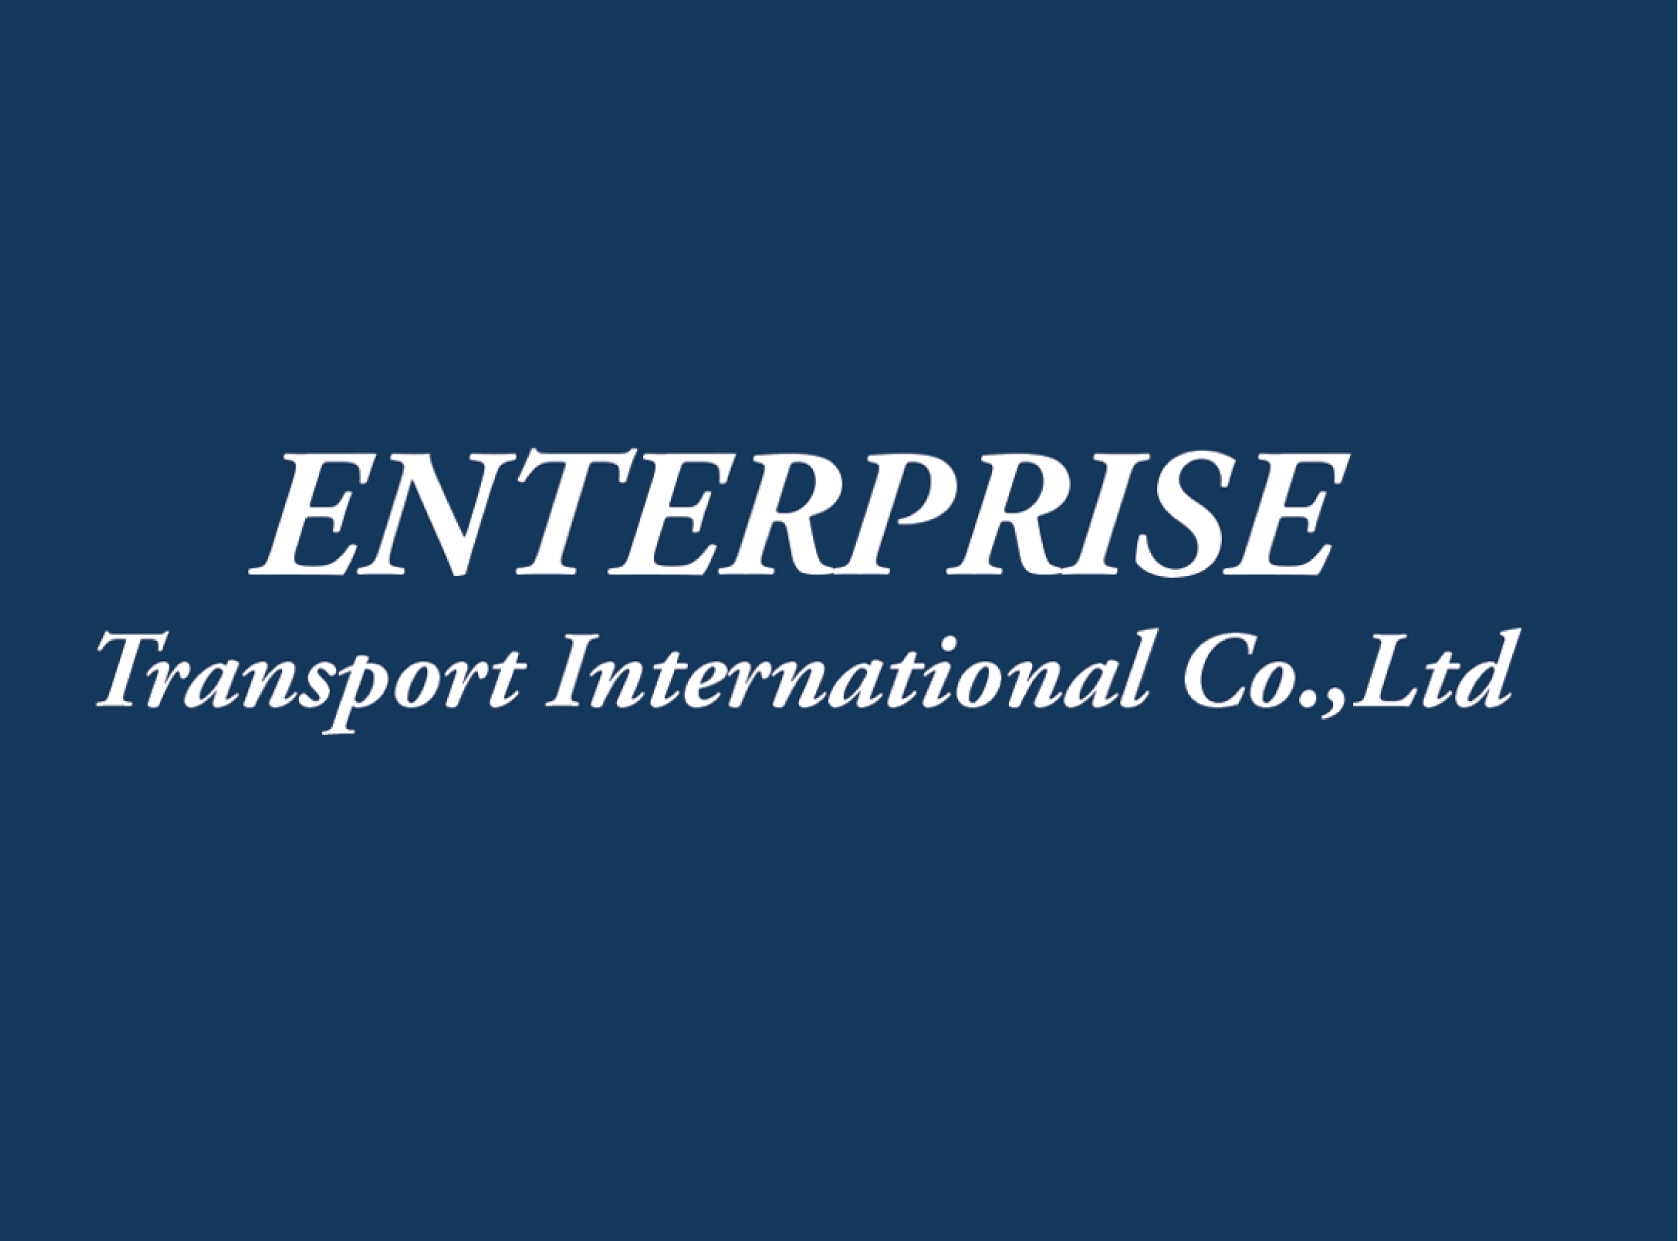 Member Profile: Enterprise Transport International Co., Ltd.